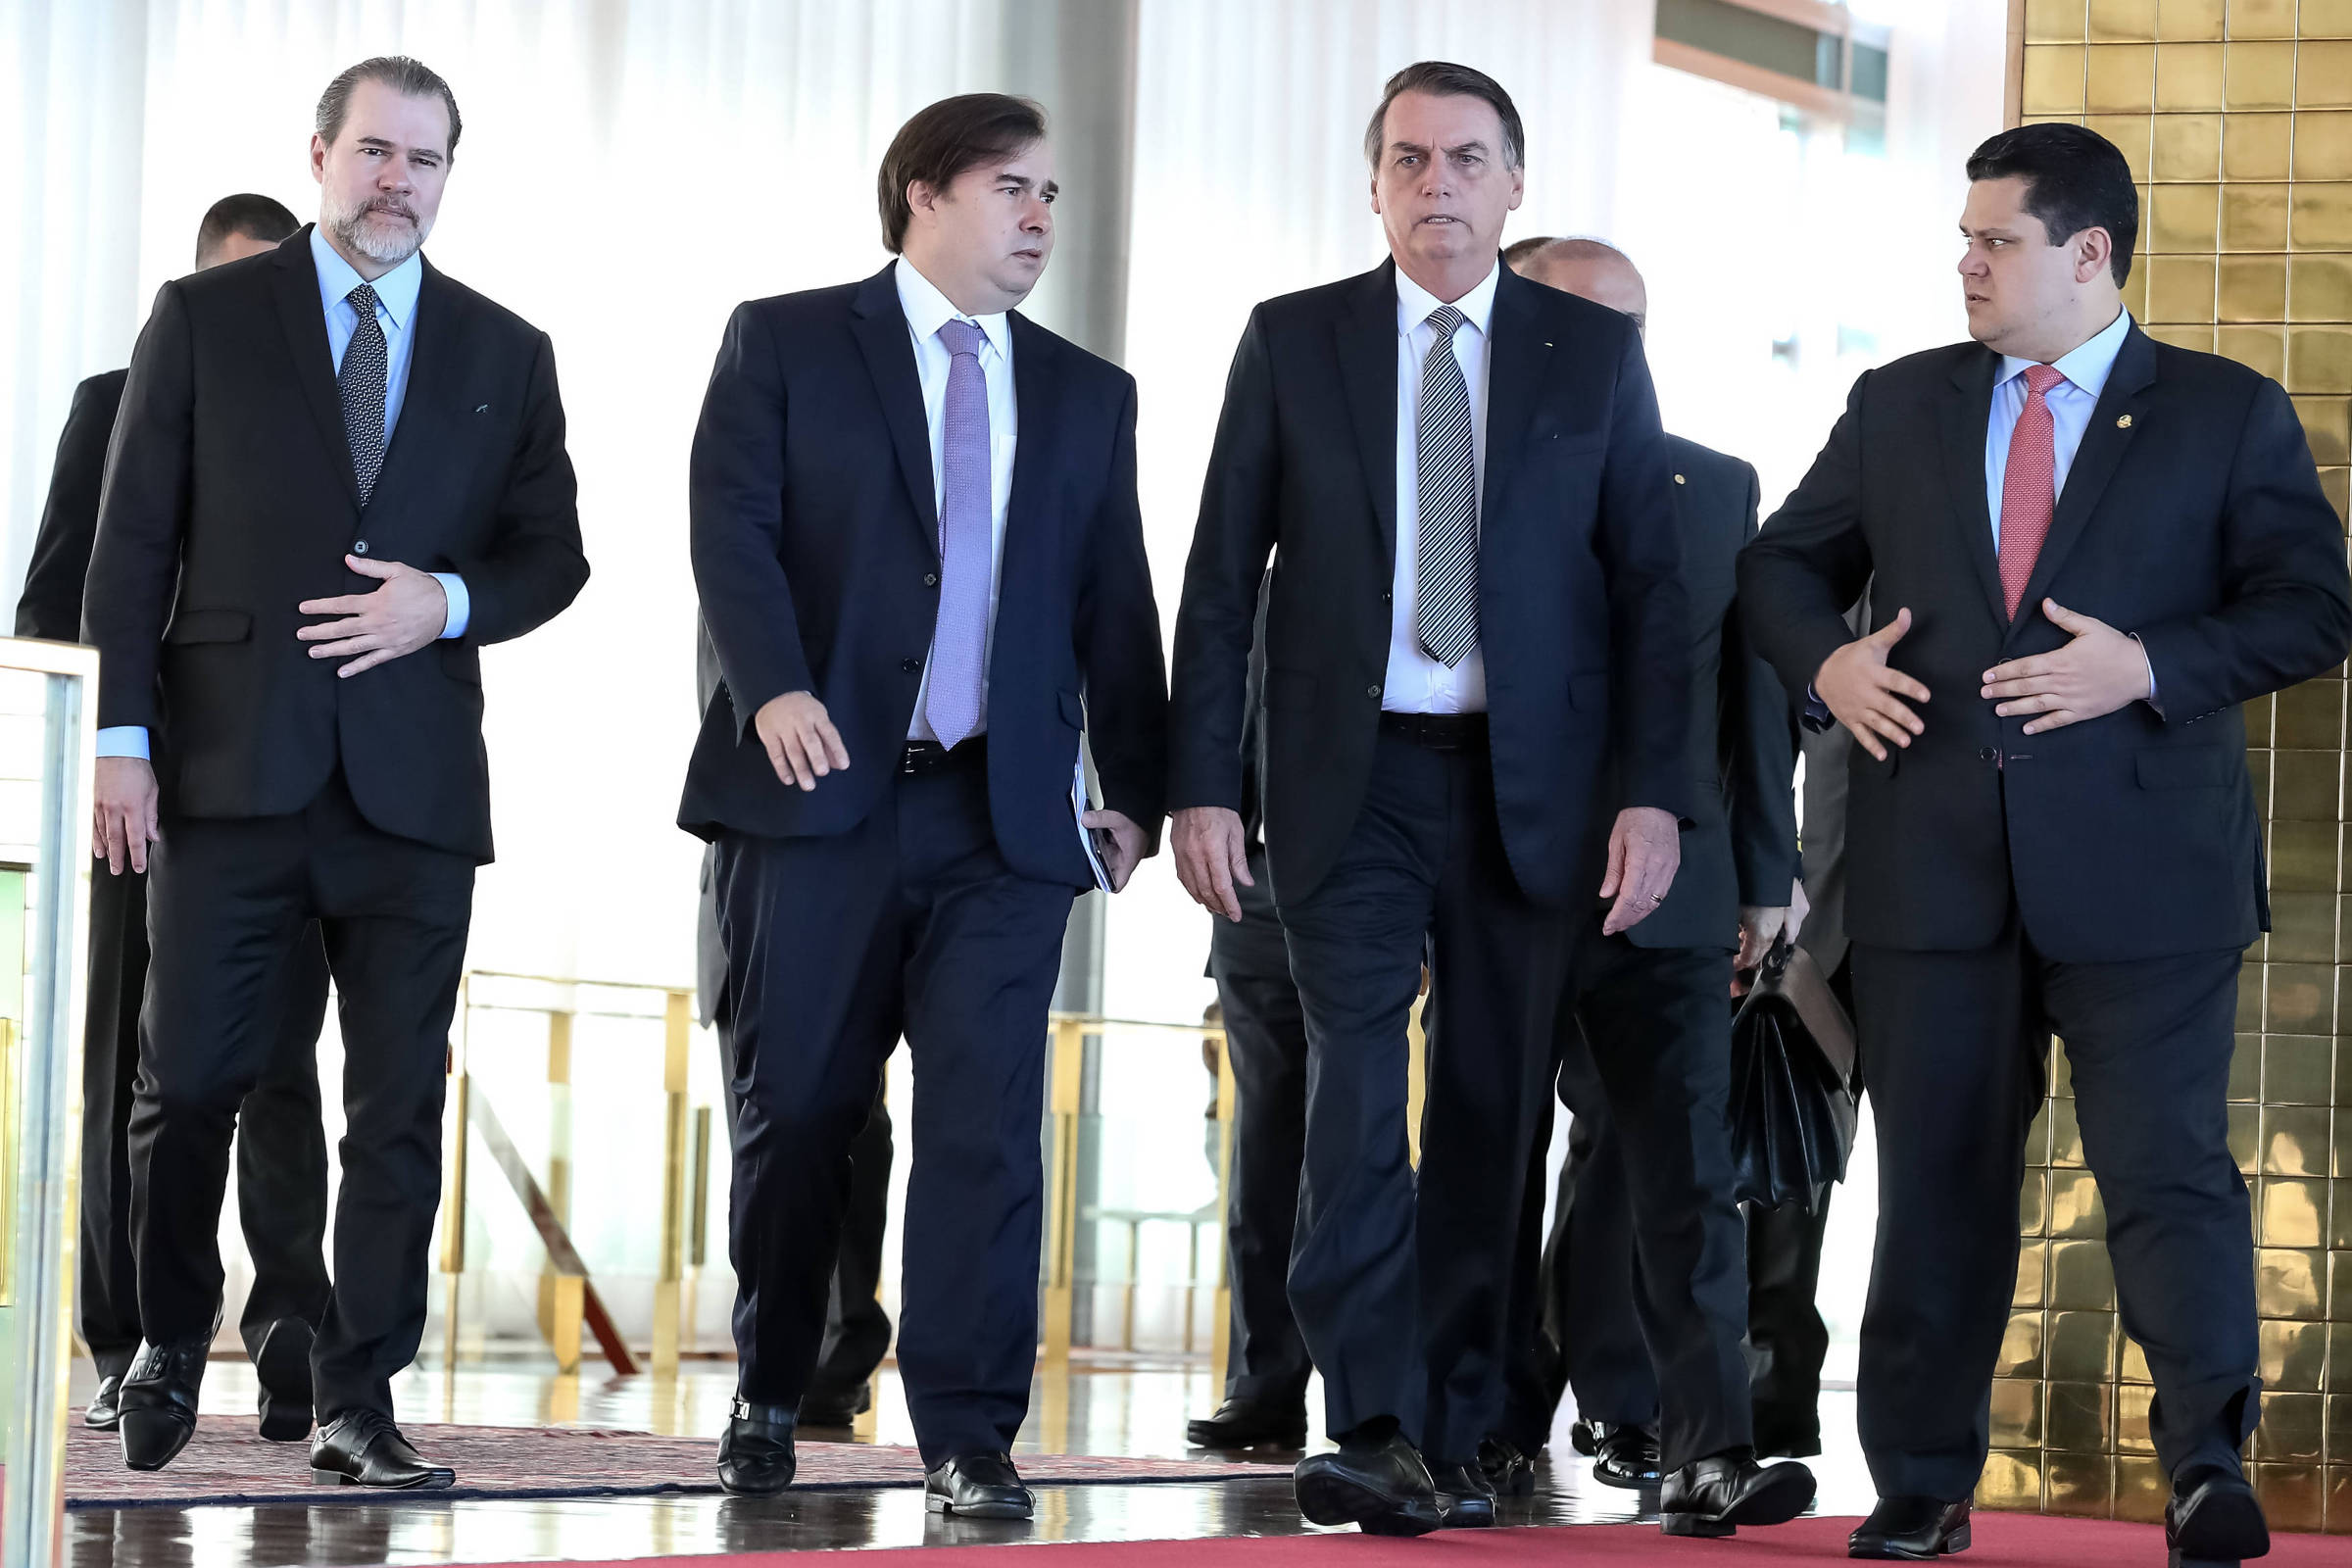 From left to right: Federal Supreme Court presiding Justice Dias Toffoli, Deputies Chamber President Rodrigo Maia, Brazilian President Jair Bolsonaro, and National Congress President Davi Alcolumbre.